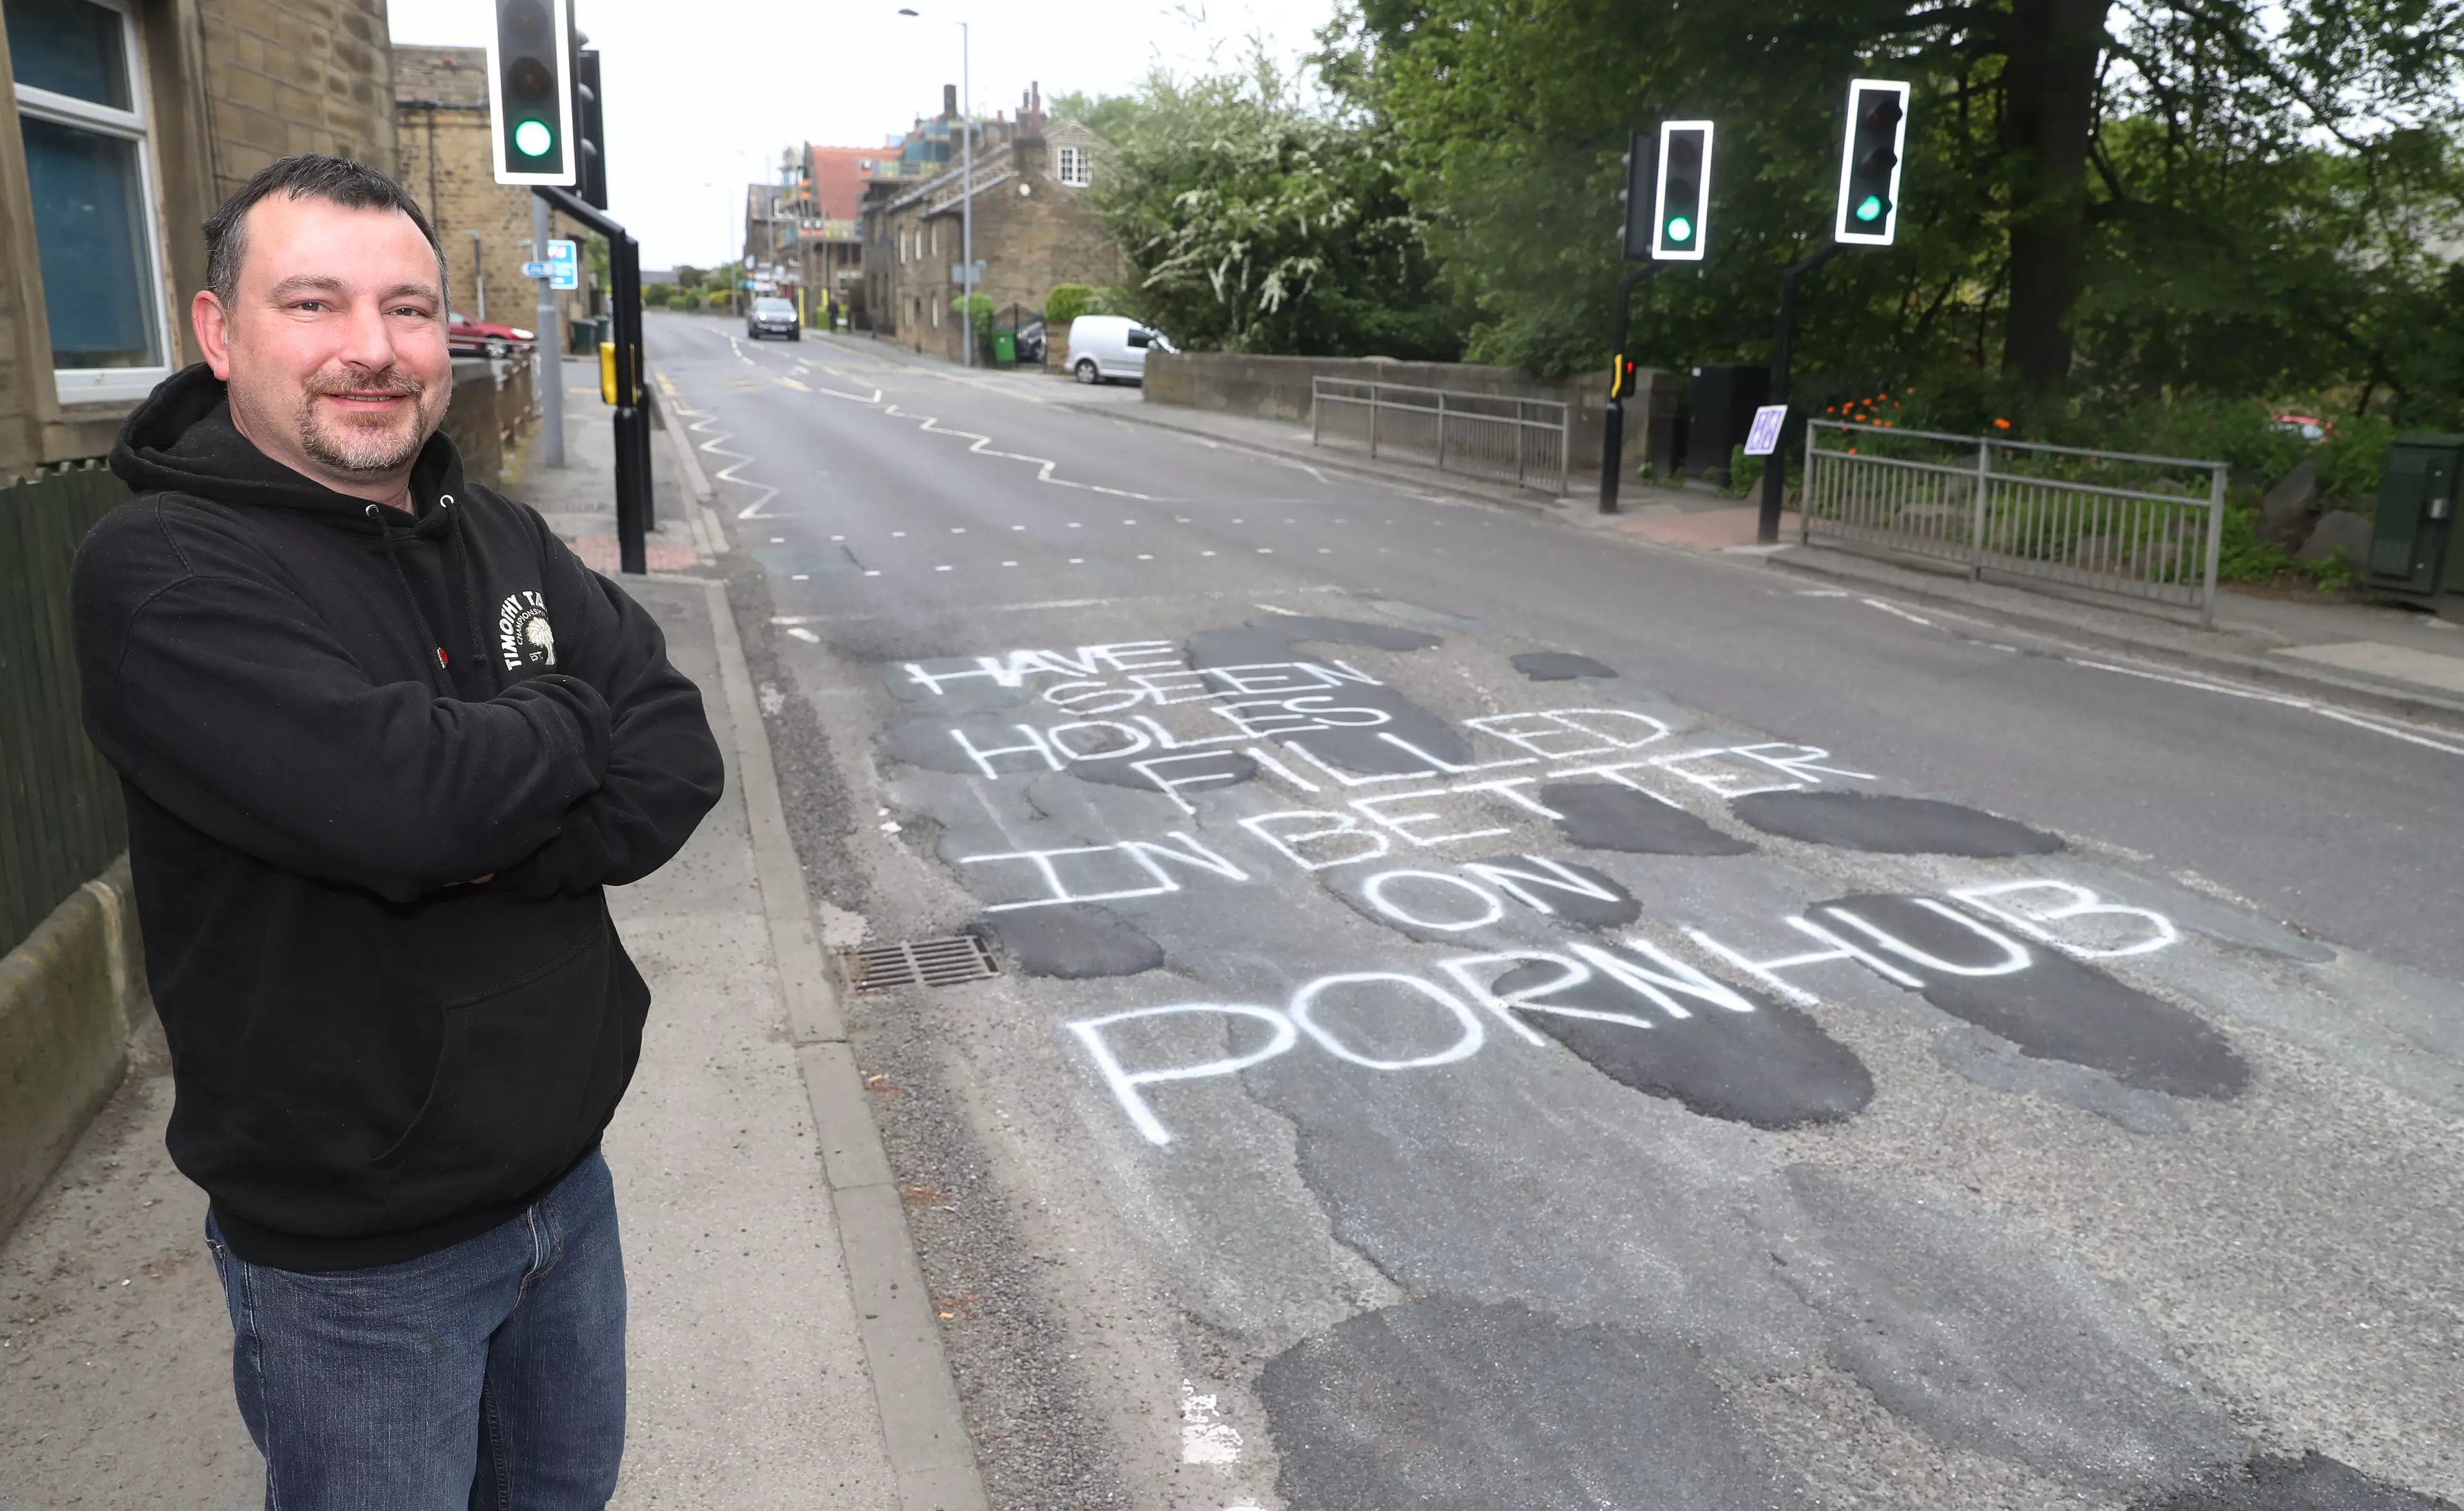 Pub landlord Scott Goodwin has offered a free pint for the graffiti artist.